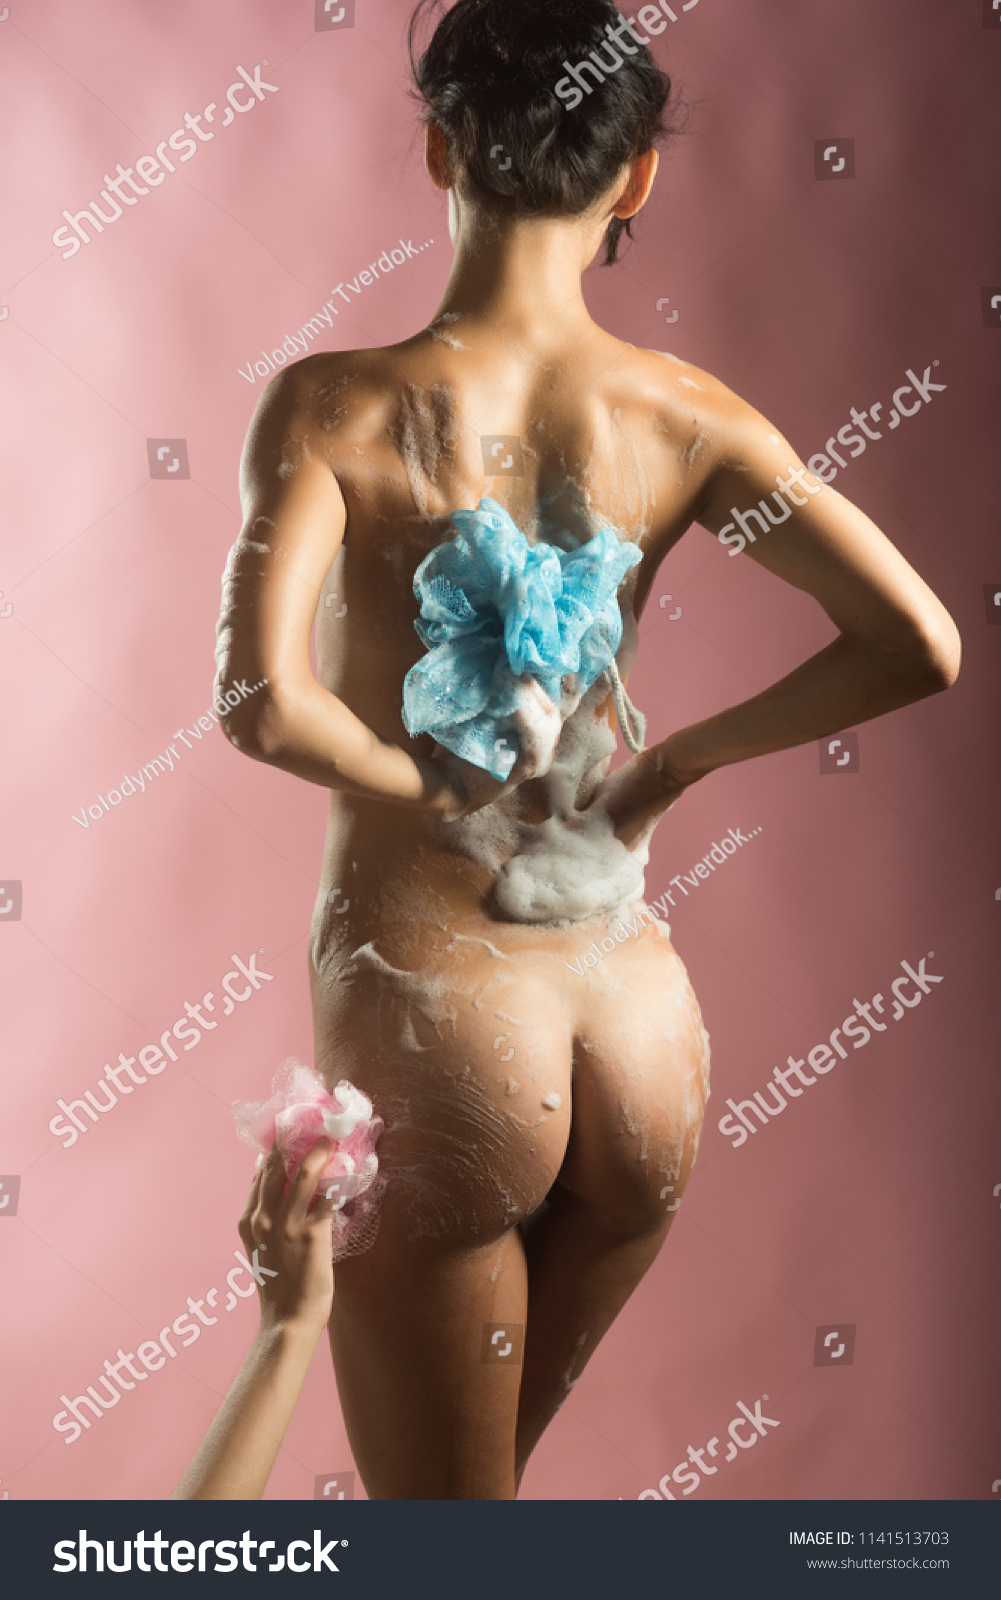 Man washing nude girl